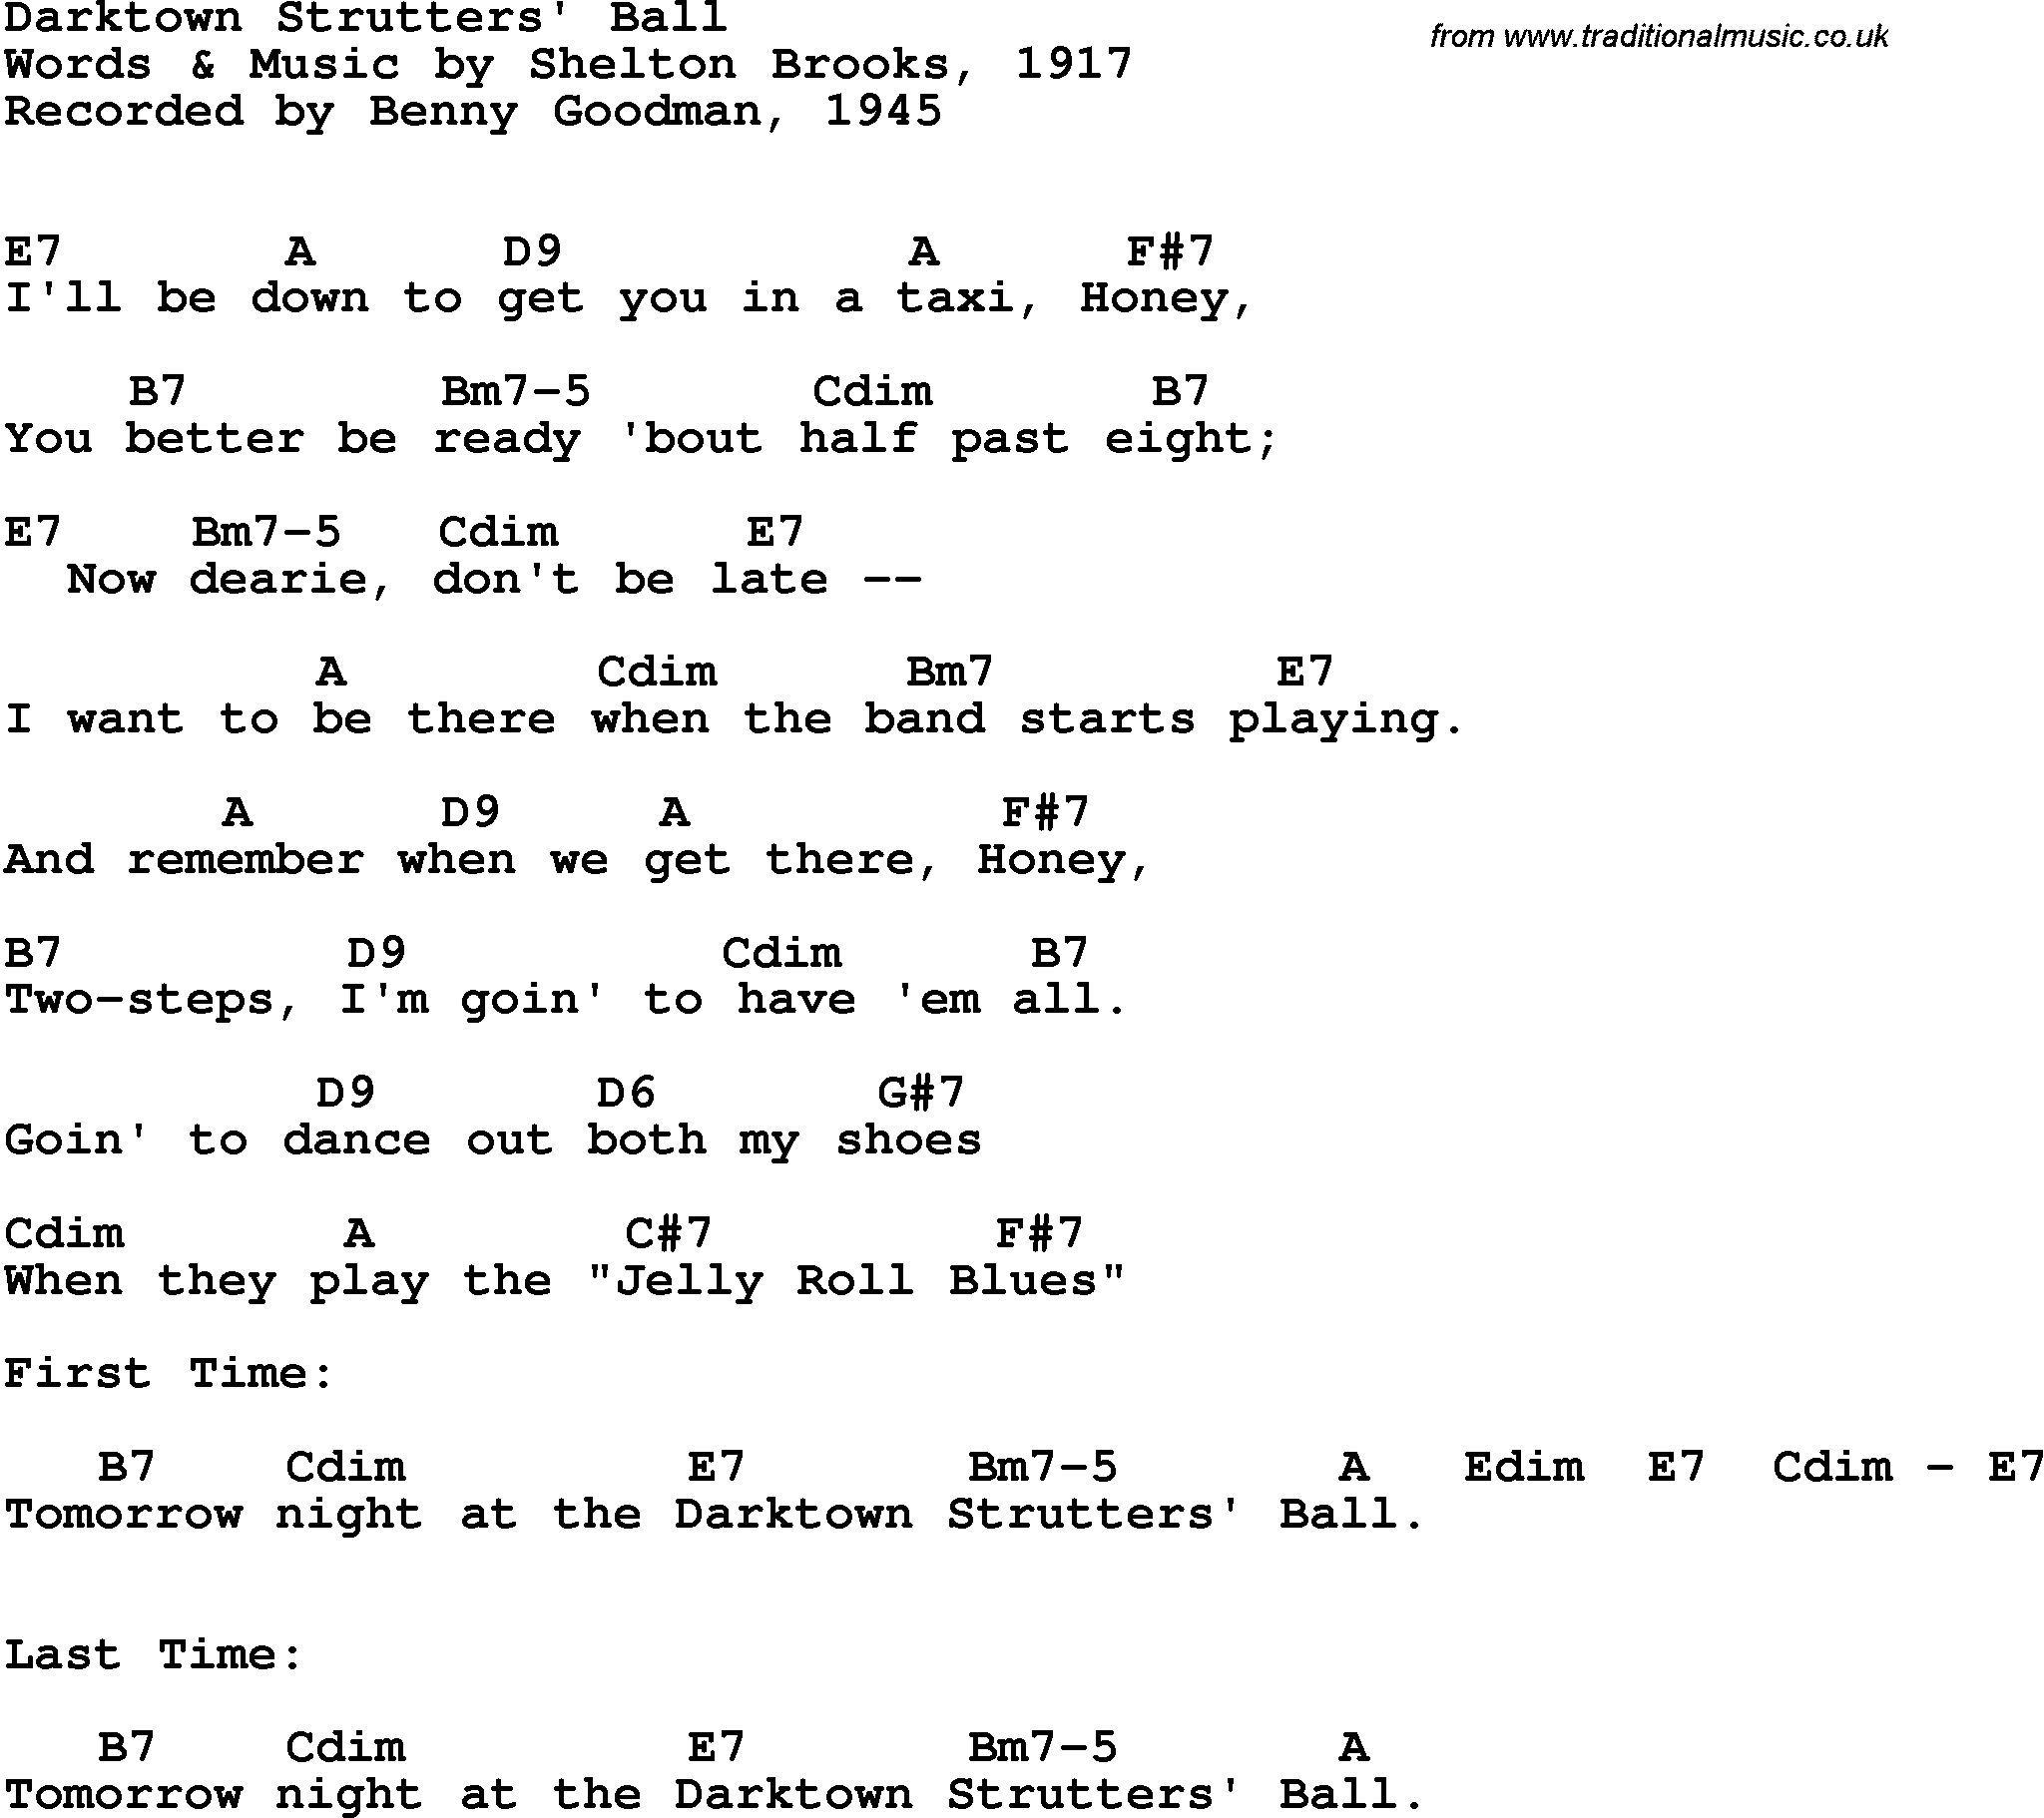 Song Lyrics with guitar chords for Darktown Strutters Ball - Benny Goodman, 1945